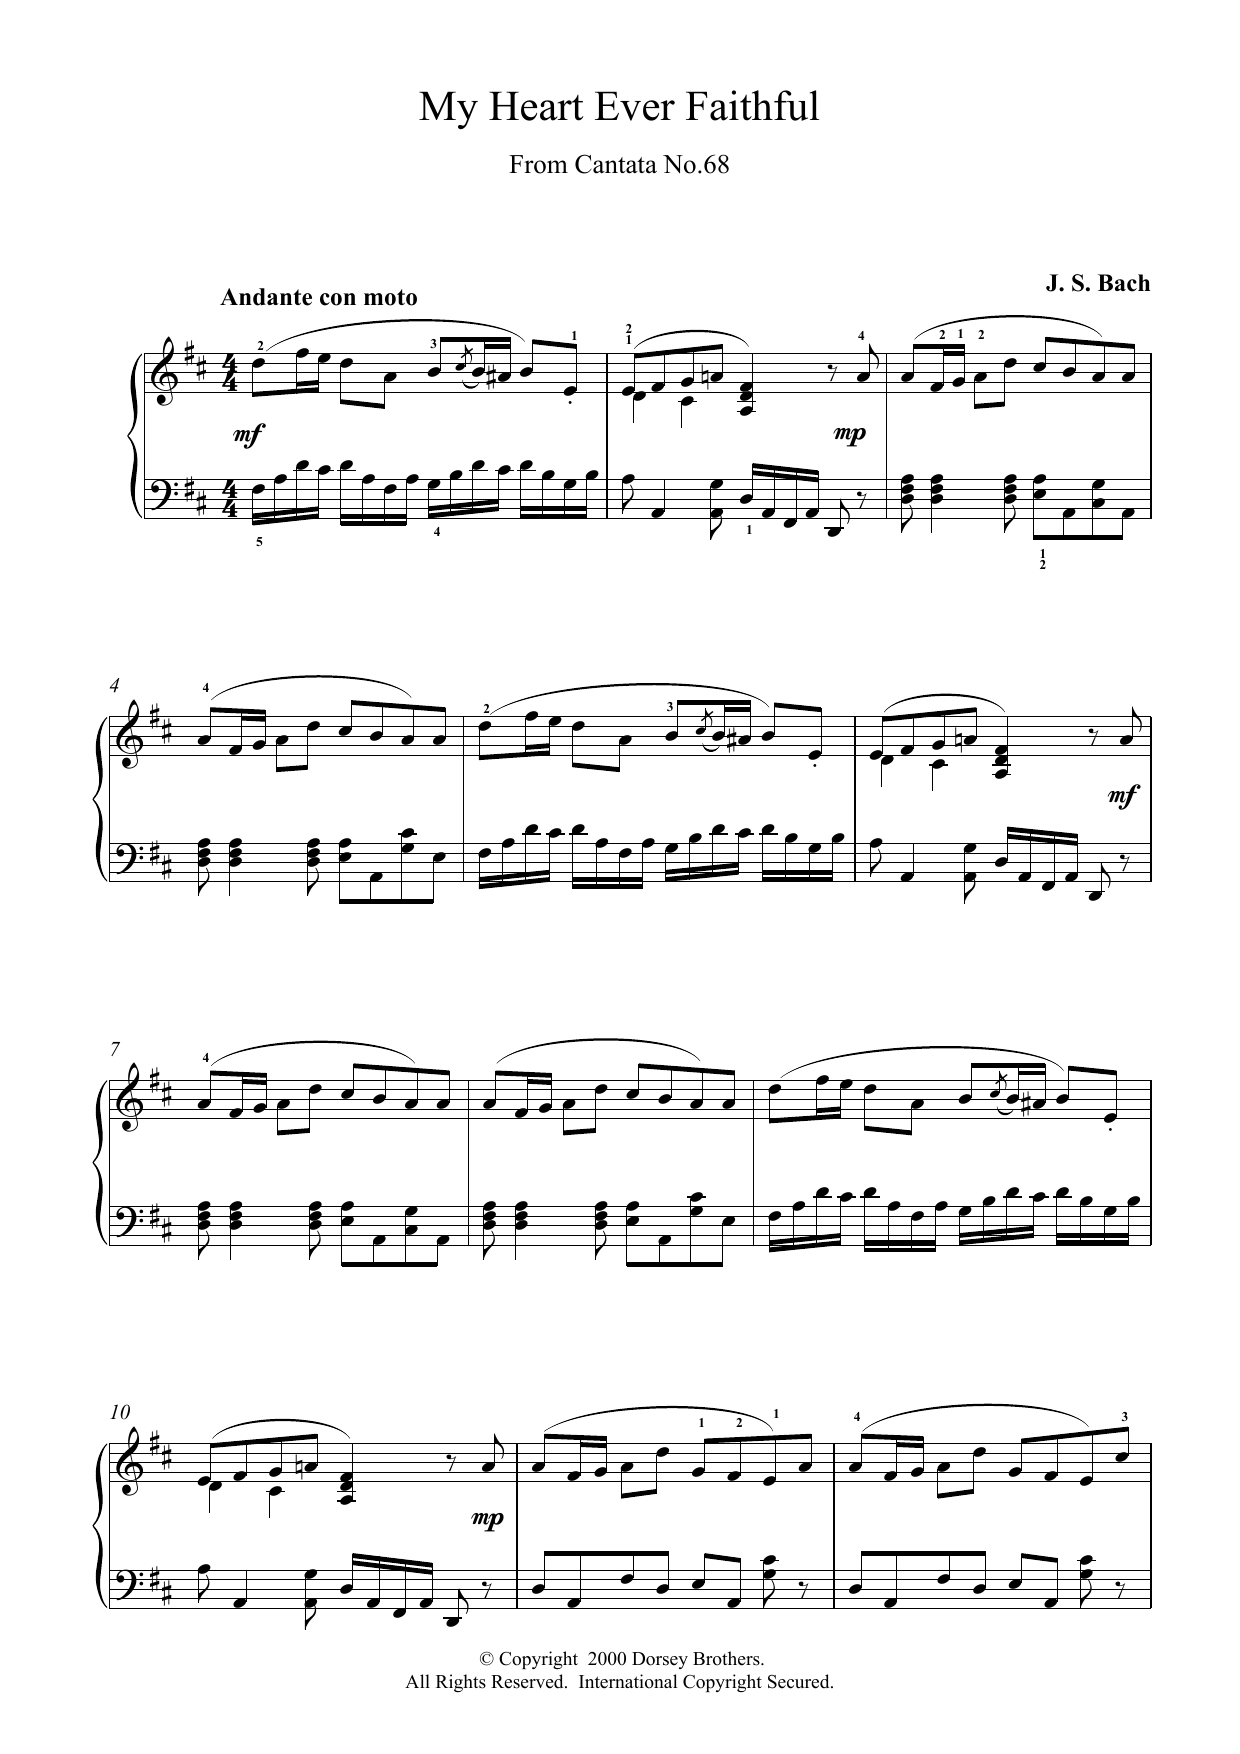 Johann Sebastian Bach My Heart Ever Faithful Sheet Music Notes & Chords for Piano - Download or Print PDF